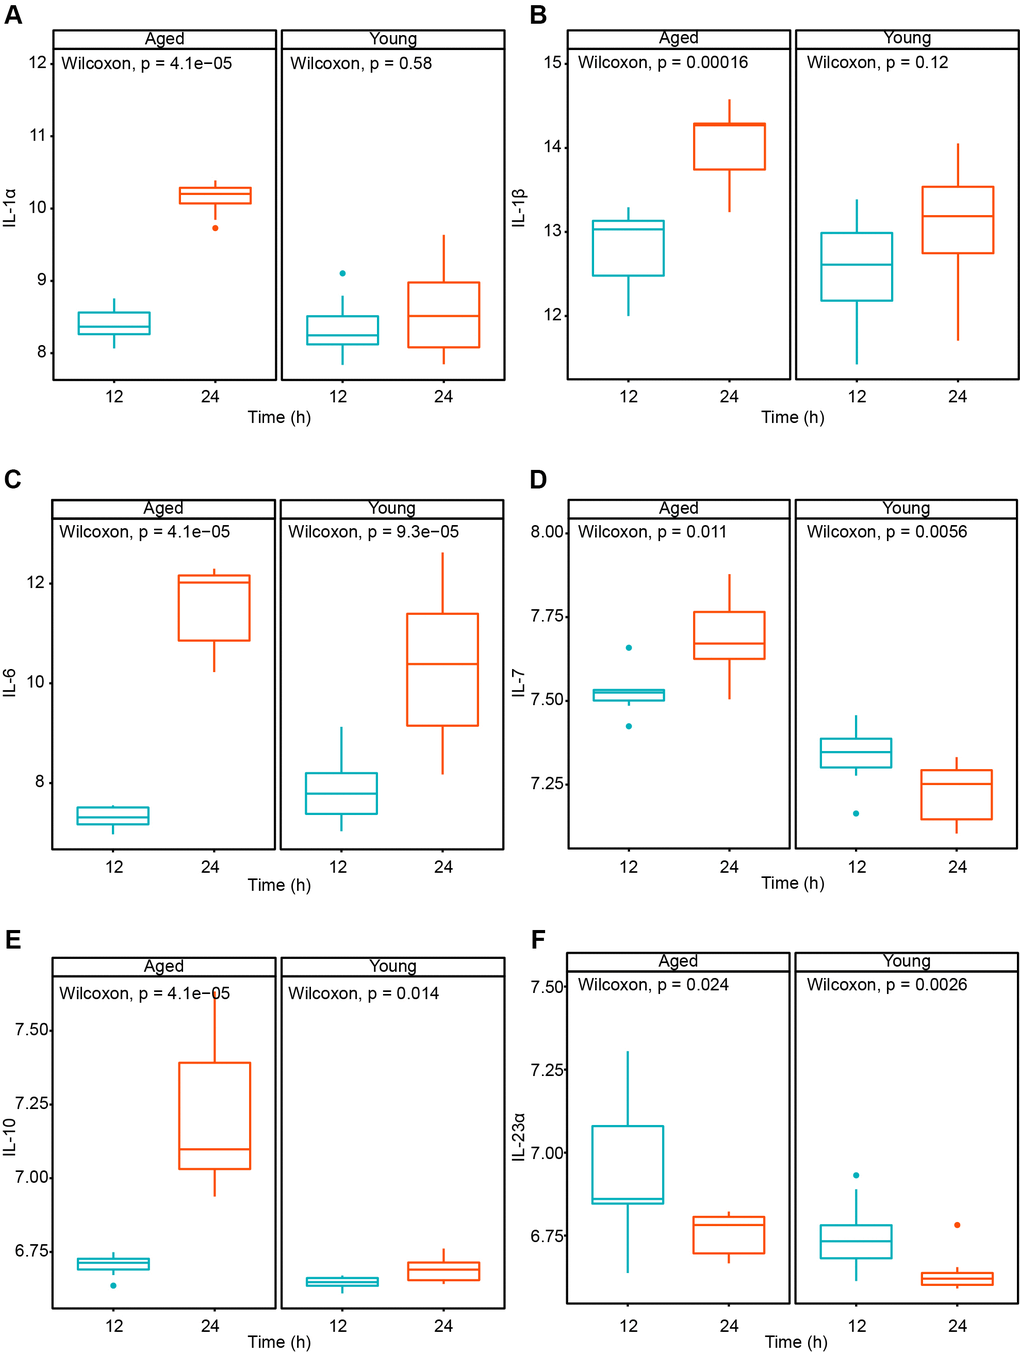 Cytokine variation in young and aged mice after MERS-CoV treated for 12 and 24 hours. (A) IL-1α; (B) IL-1β; (C) IL-6; (D) IL-7; (E) IL-10; (F) IL-23α.